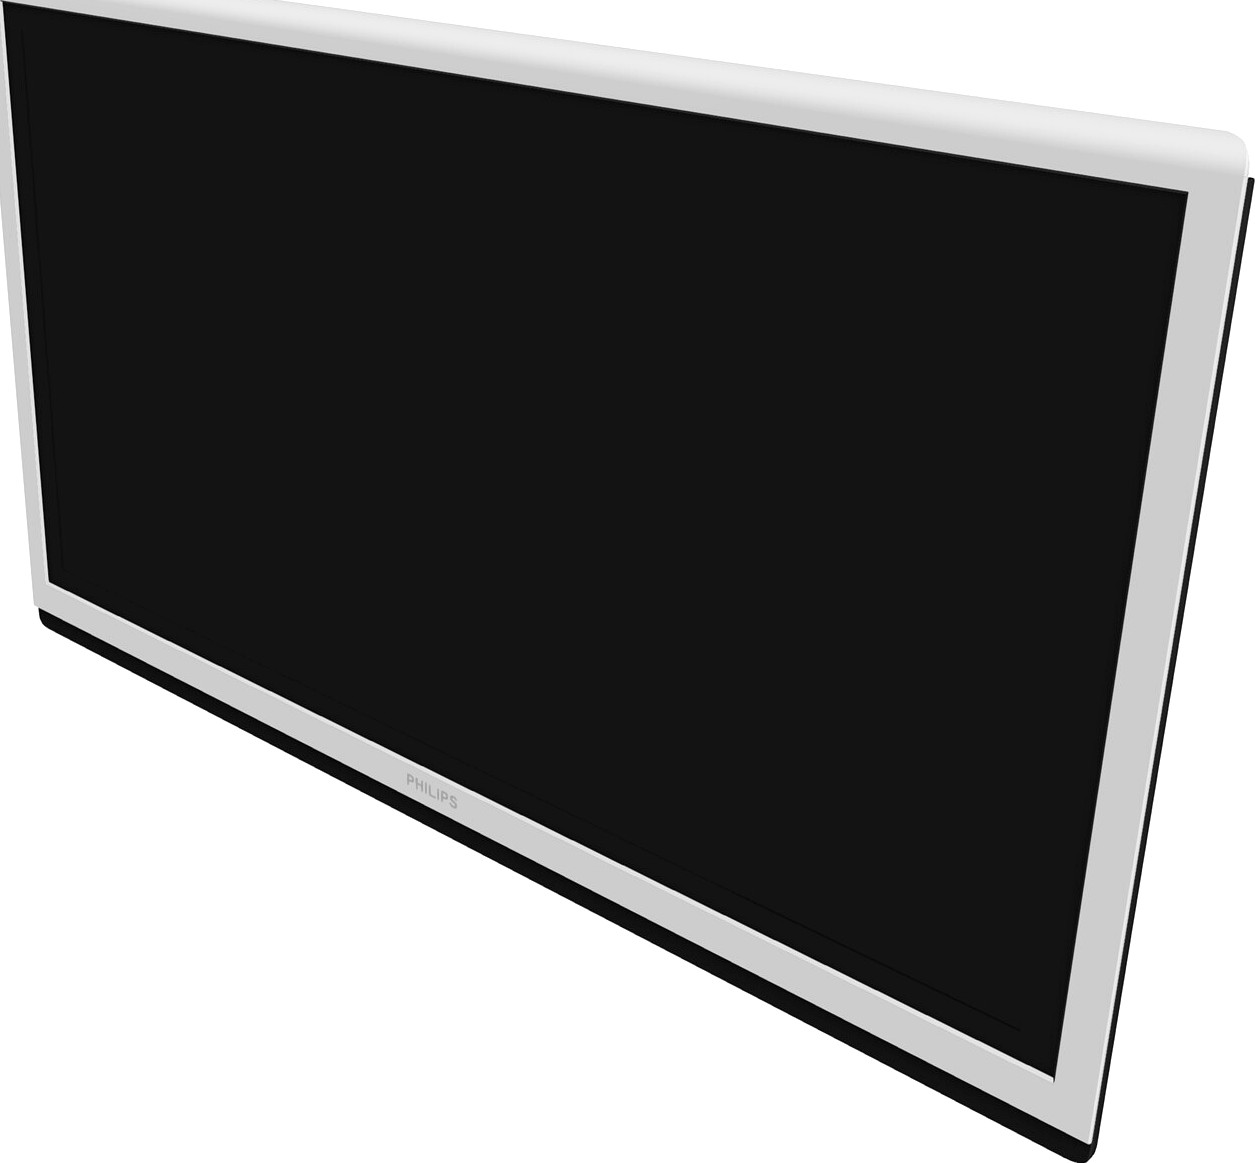 Philips LED TV 42 inch (2013)